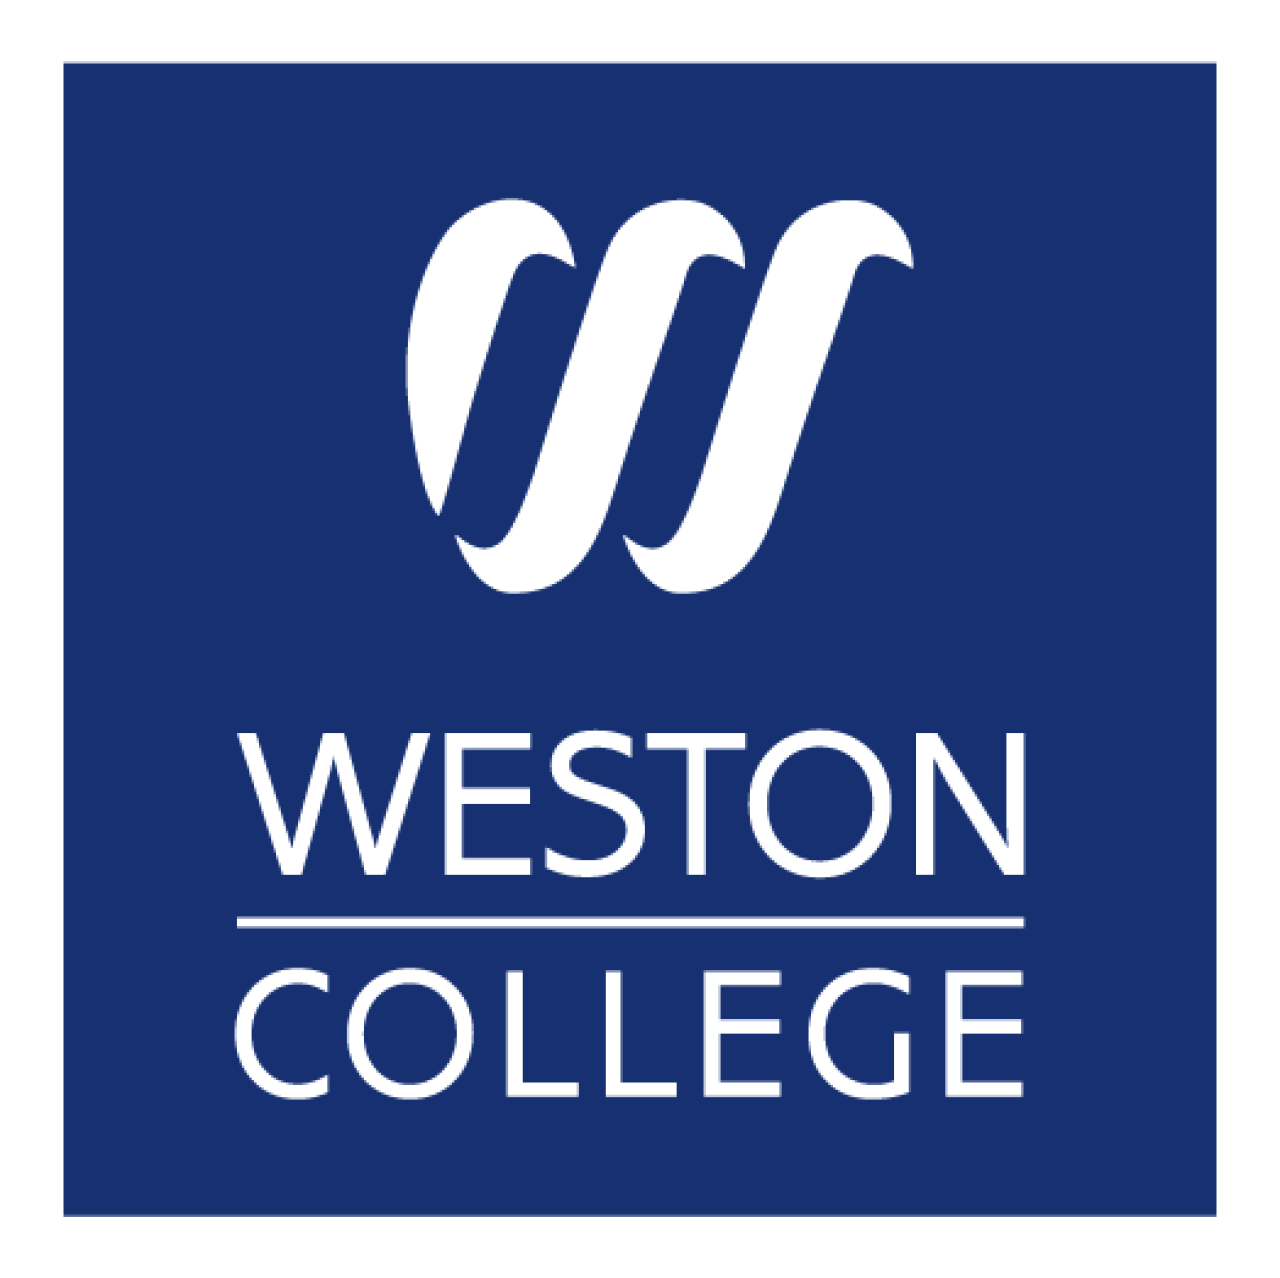 Weston College logo.